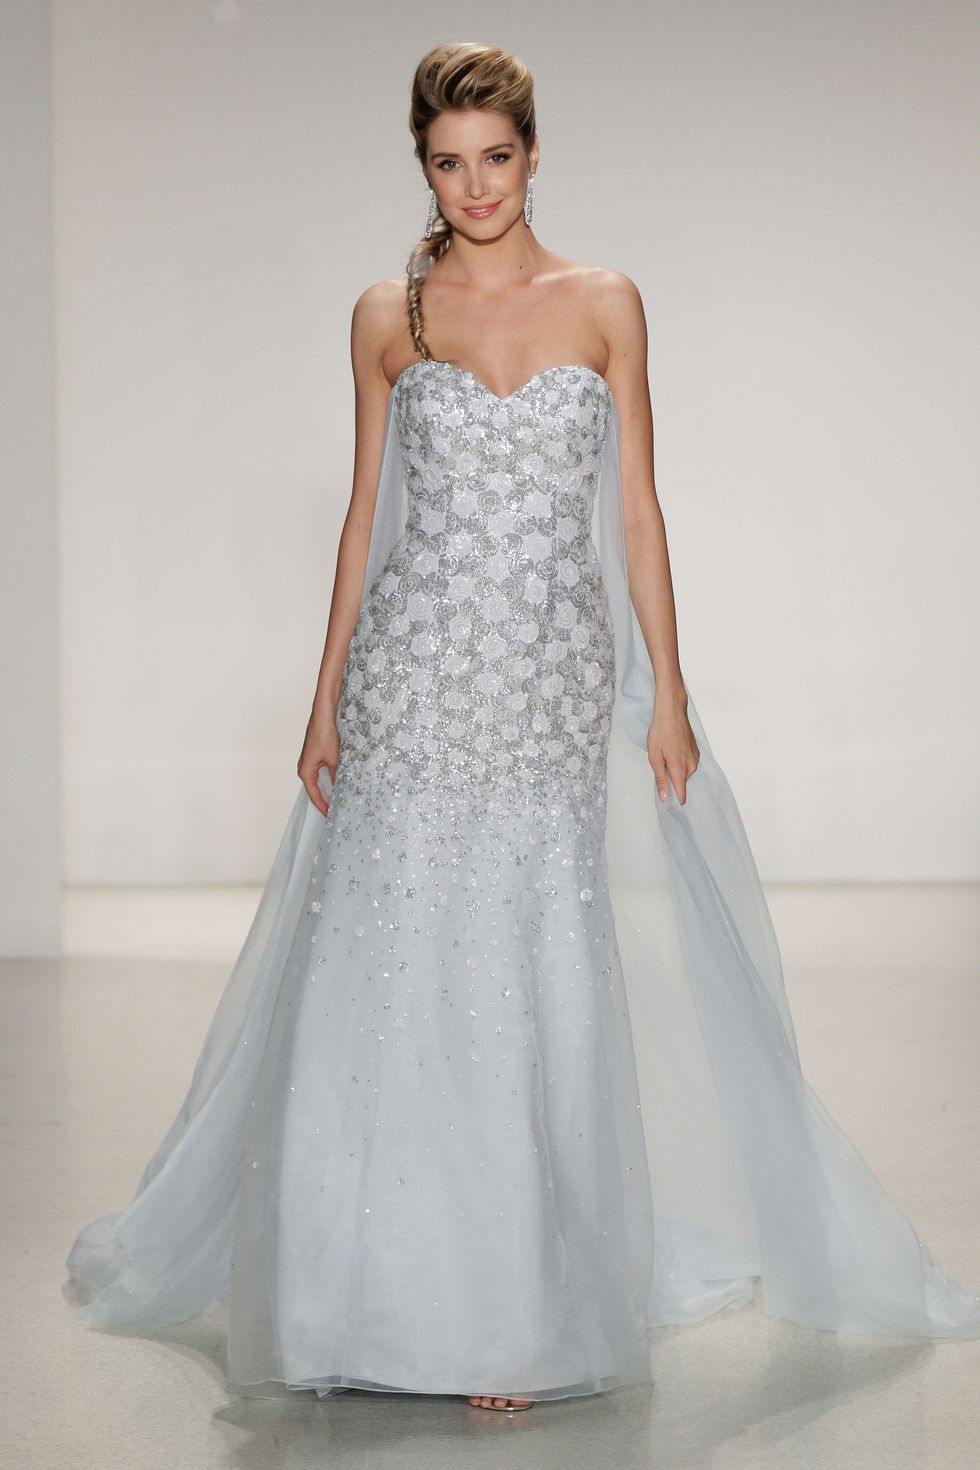 Alfred Angelo for Disney Frozen wedding dress